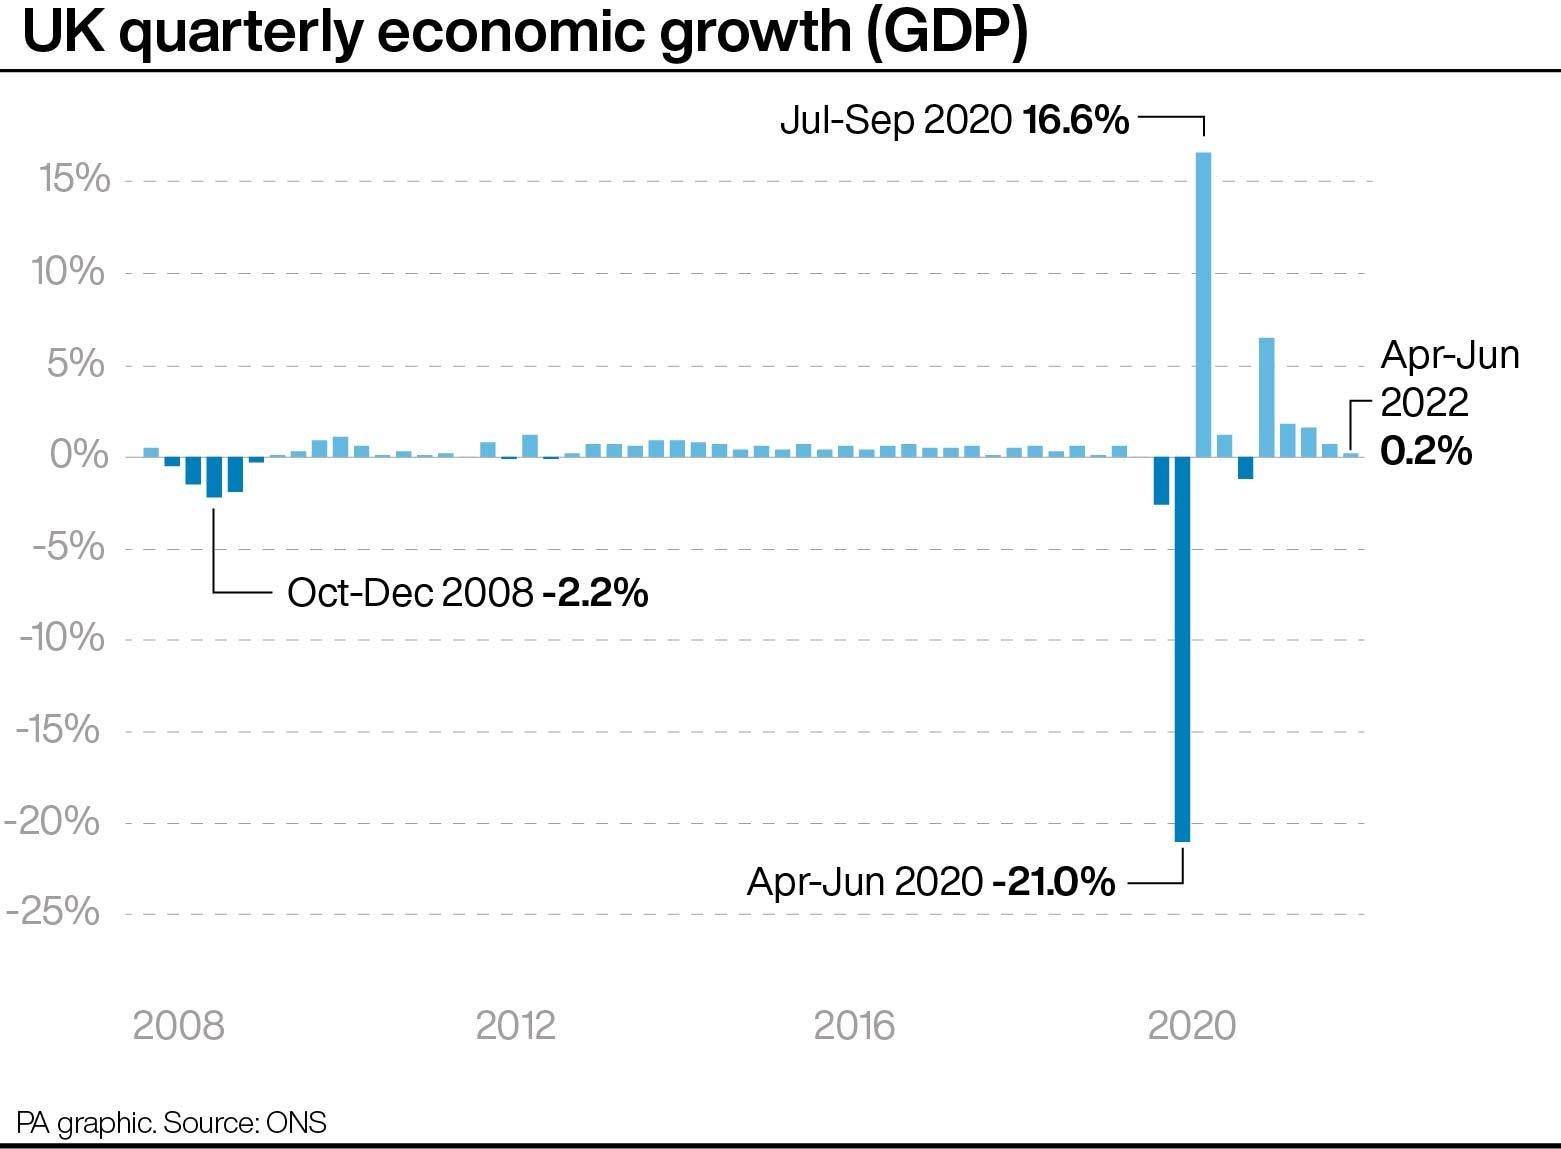 UK quarterly economic growth since 2008